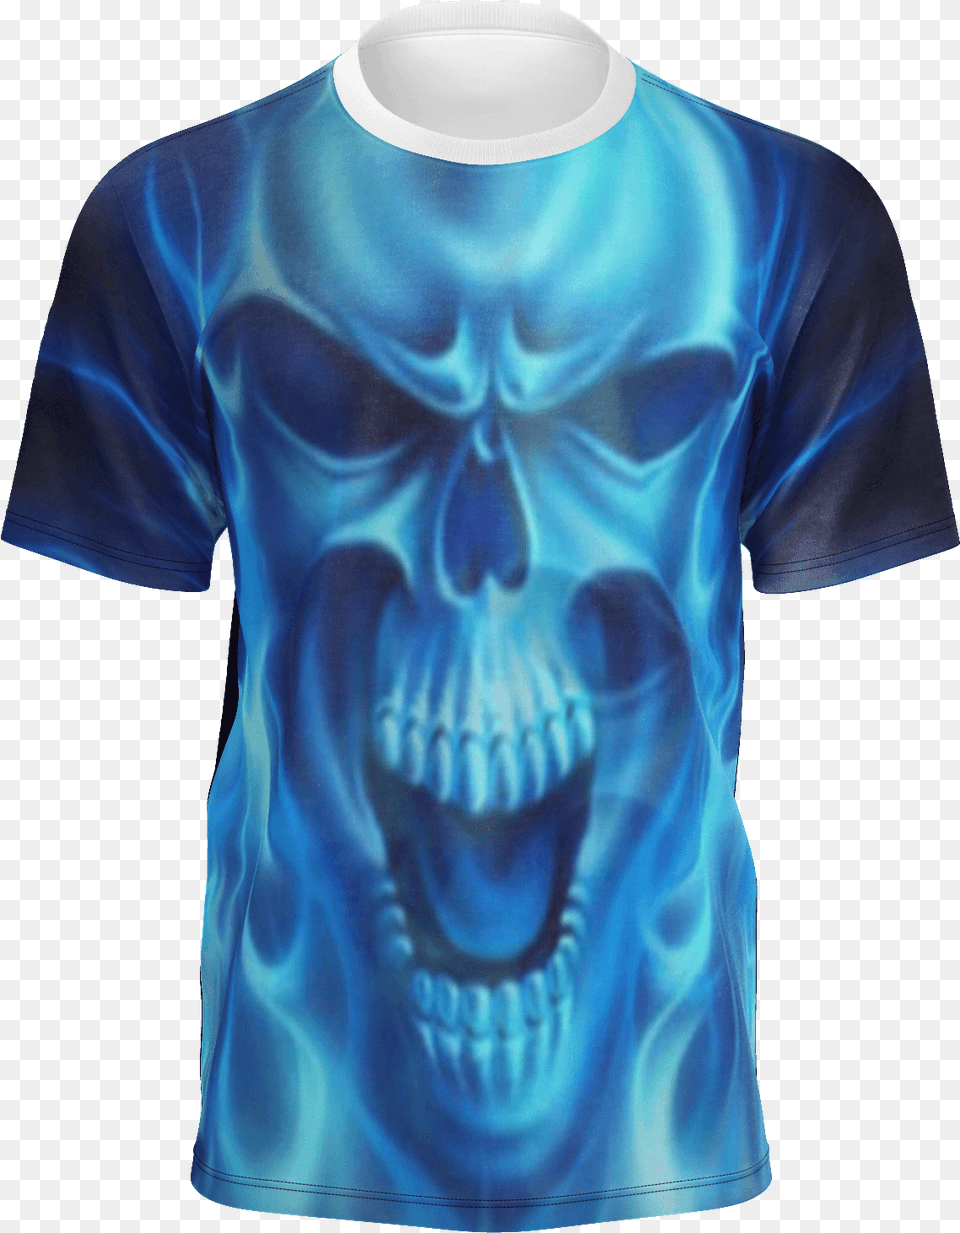 Blue Skull Men39s T Shirt Skull, Clothing, T-shirt, Adult, Male Free Png Download